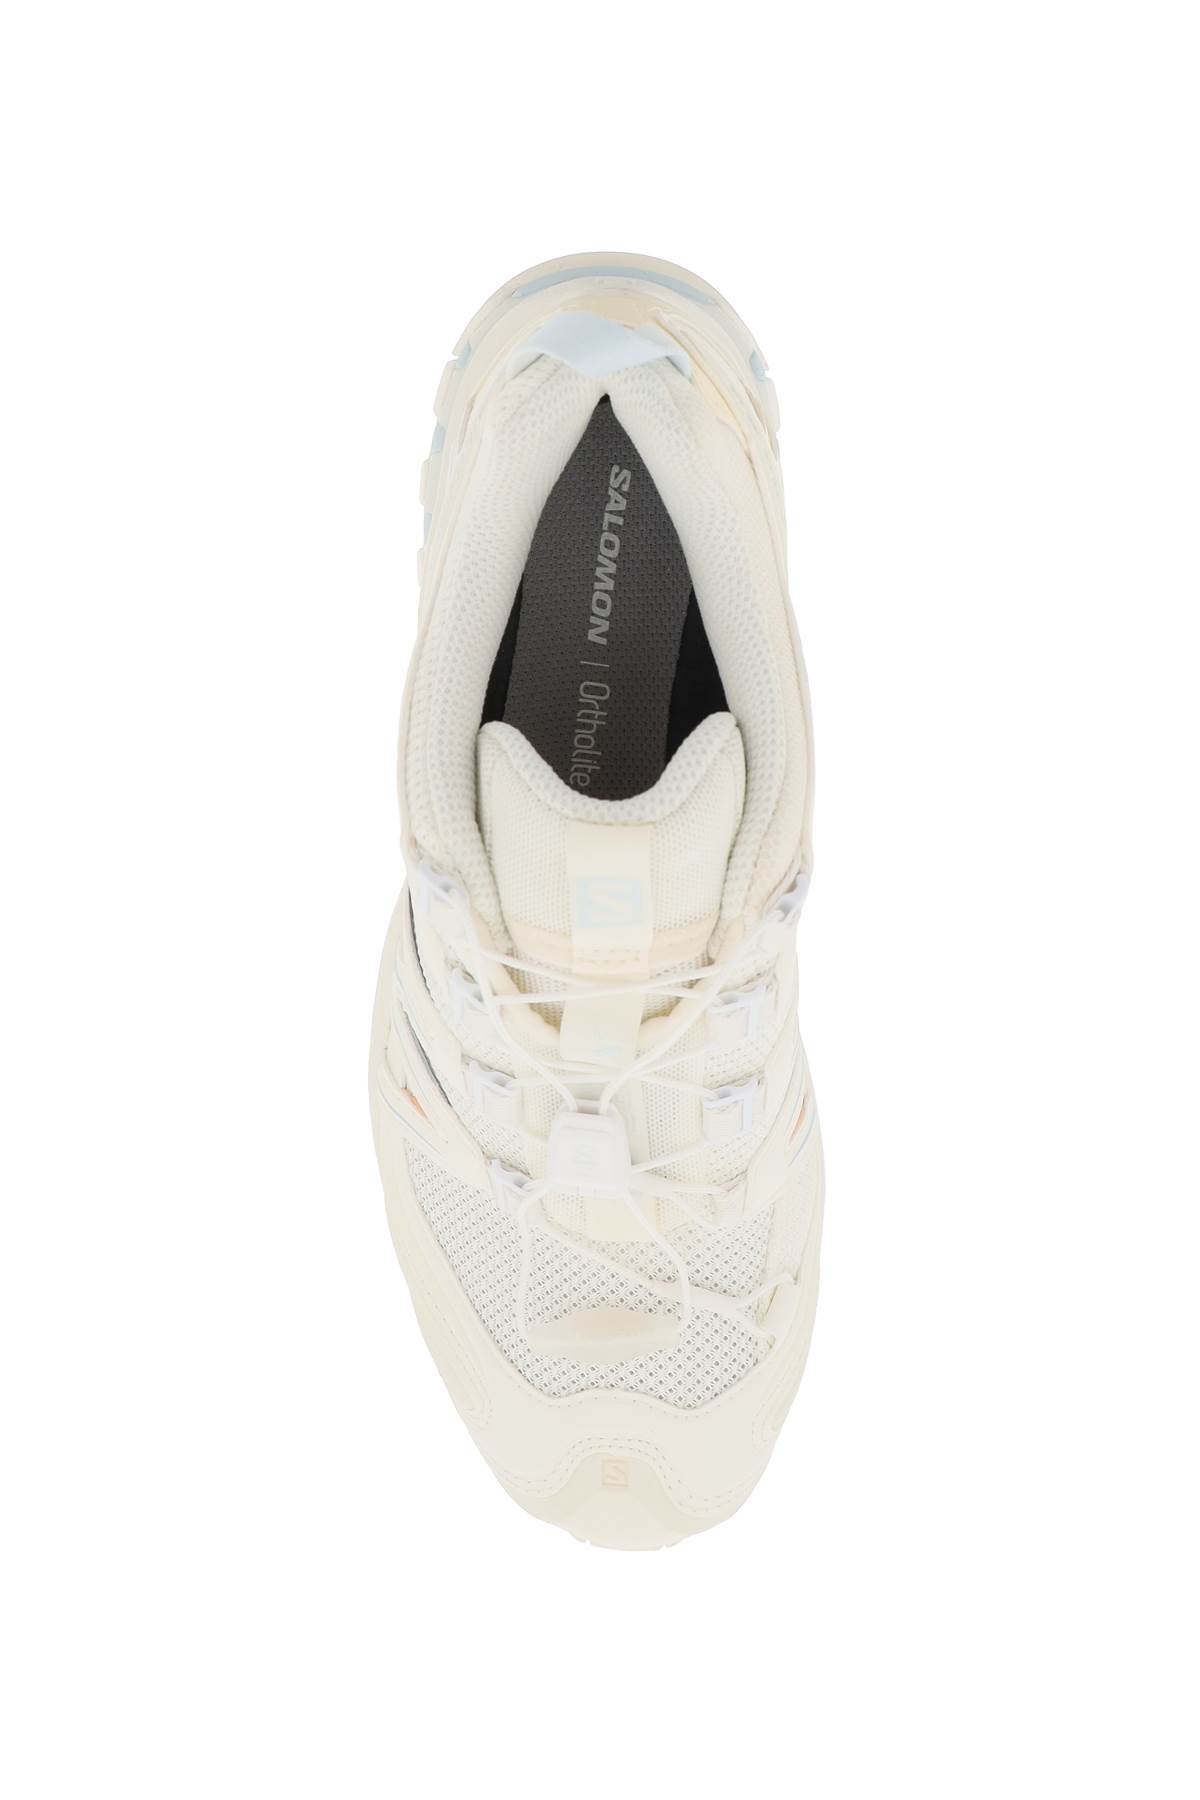 Shop Salomon Xa Pro 3d Sneakers In Vanilla Ice Ballad Blue Peach Quartz (white)